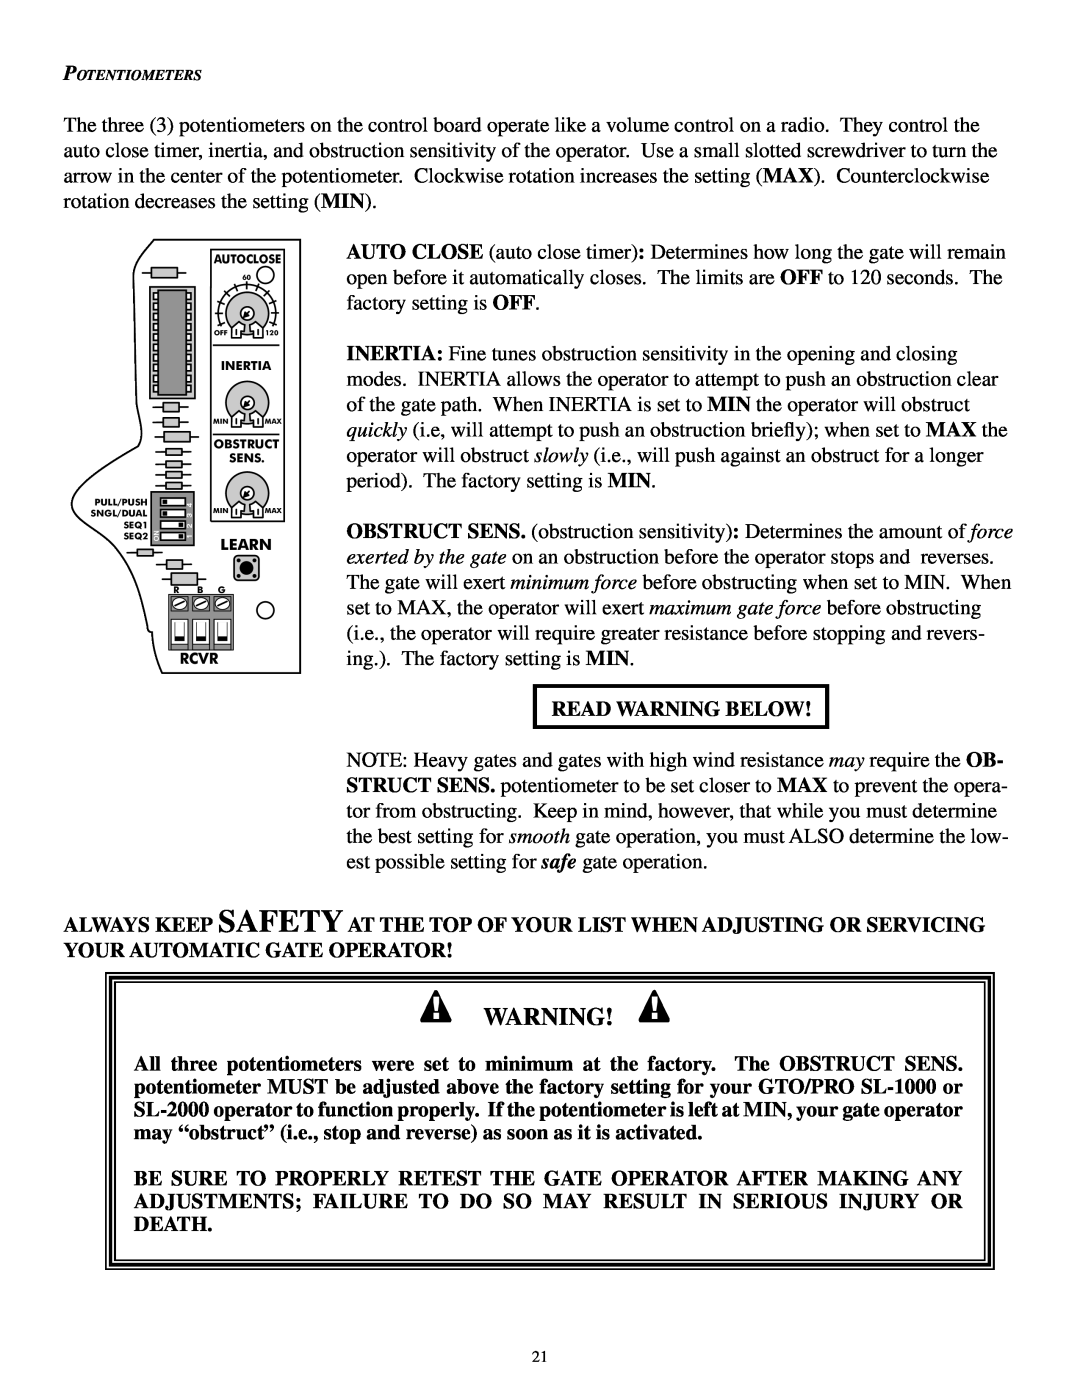 GTO SL-2000B, SL-1000B installation manual Read Warning Below 